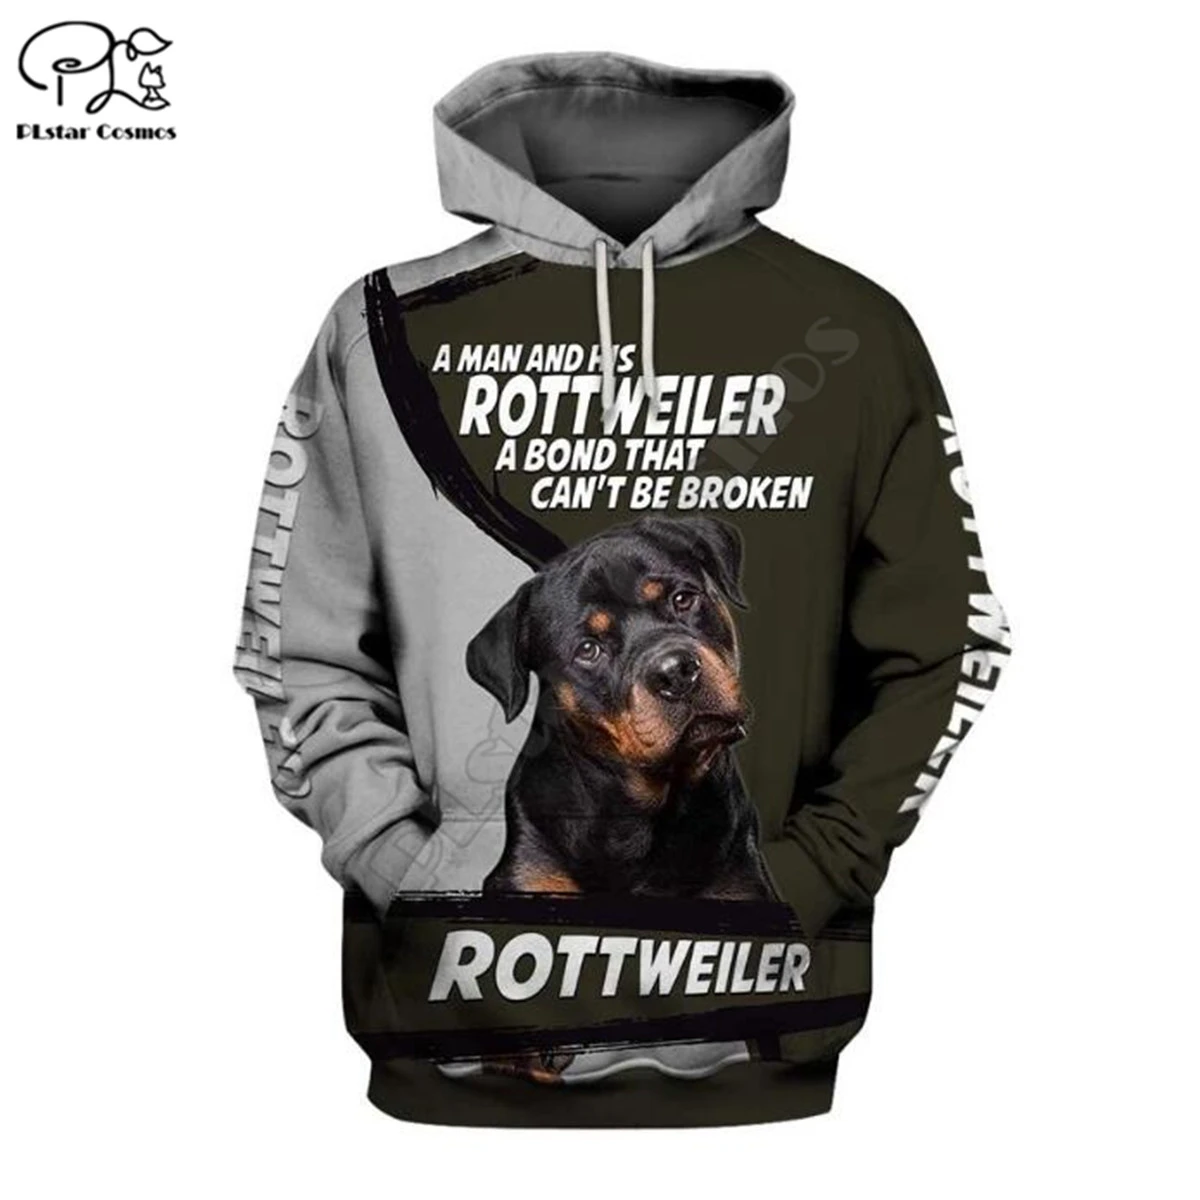 Funny Rottweiler dog 3D Print Hoodies Men Women Casual Pullover Sweatshirts Tops